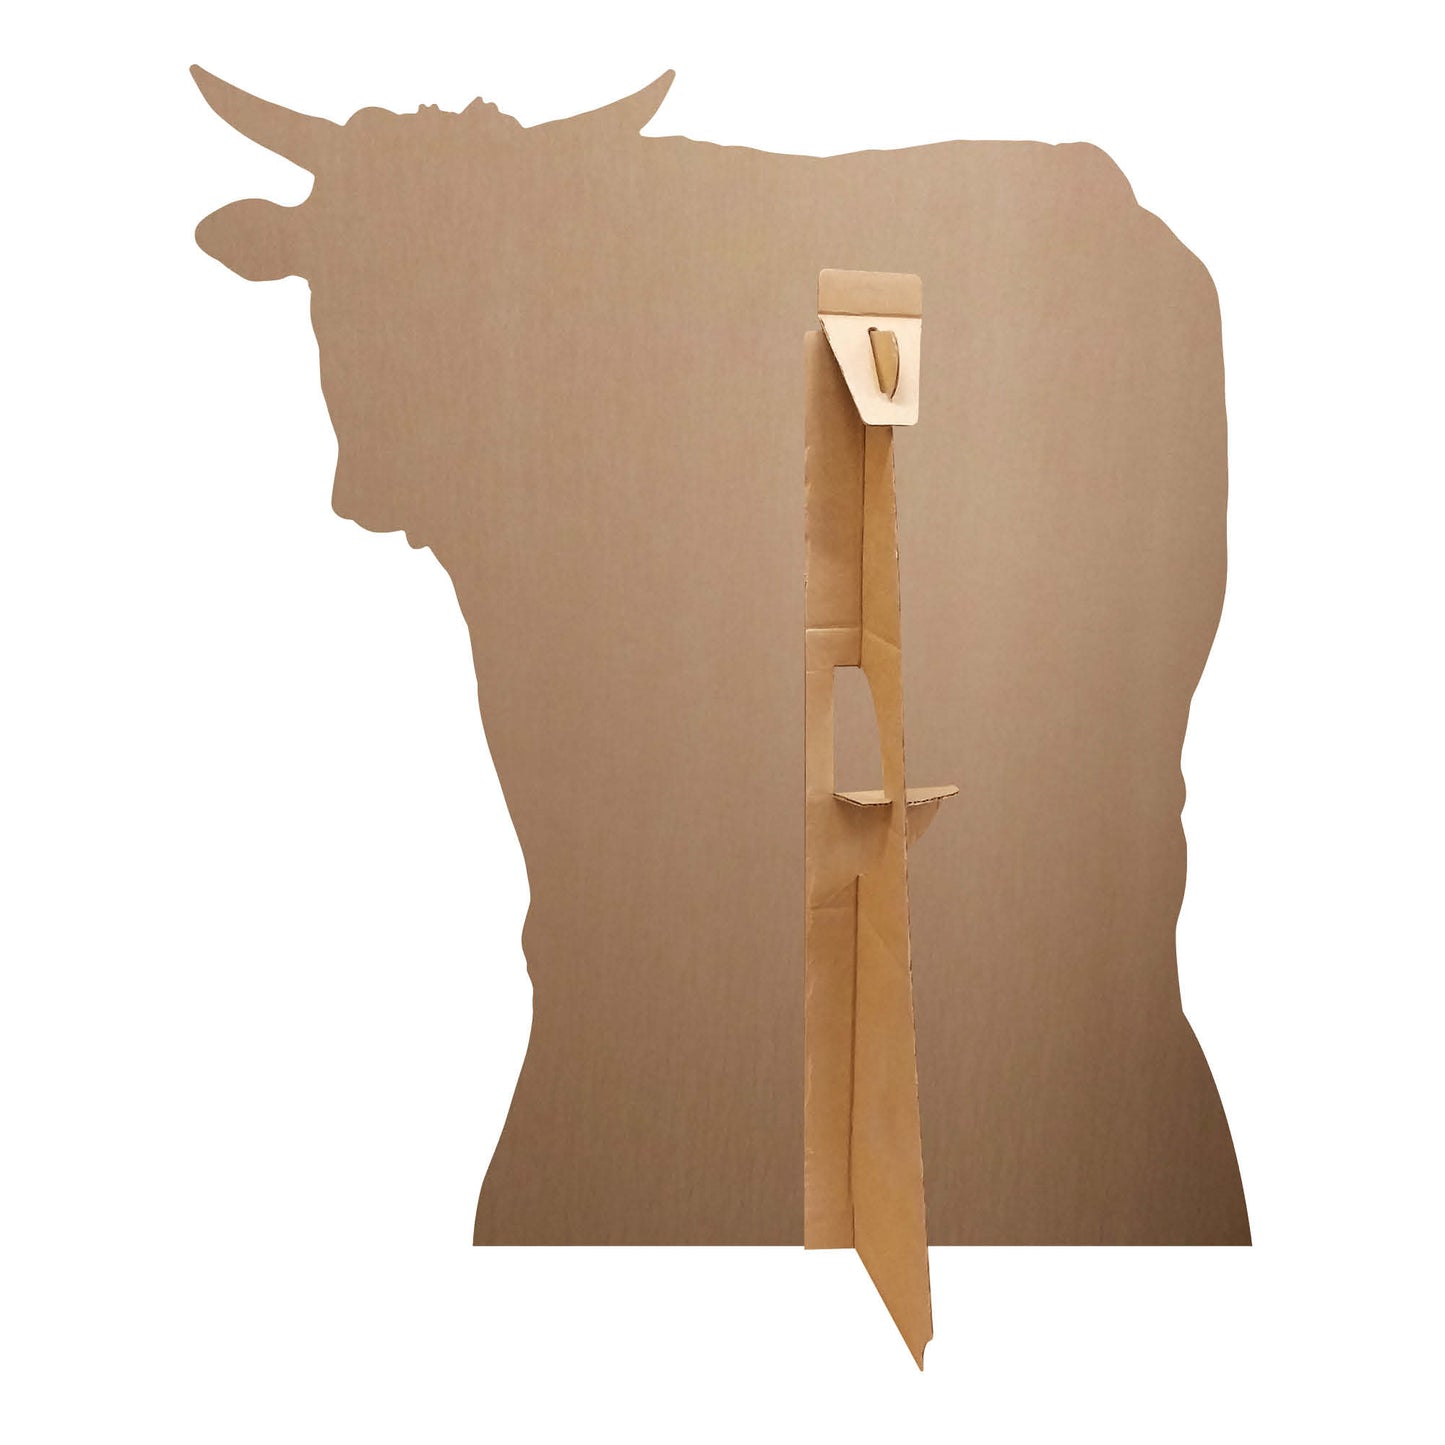 SC4436 Young Bull Farm Animal Cardboard Cut Out Height 100cm